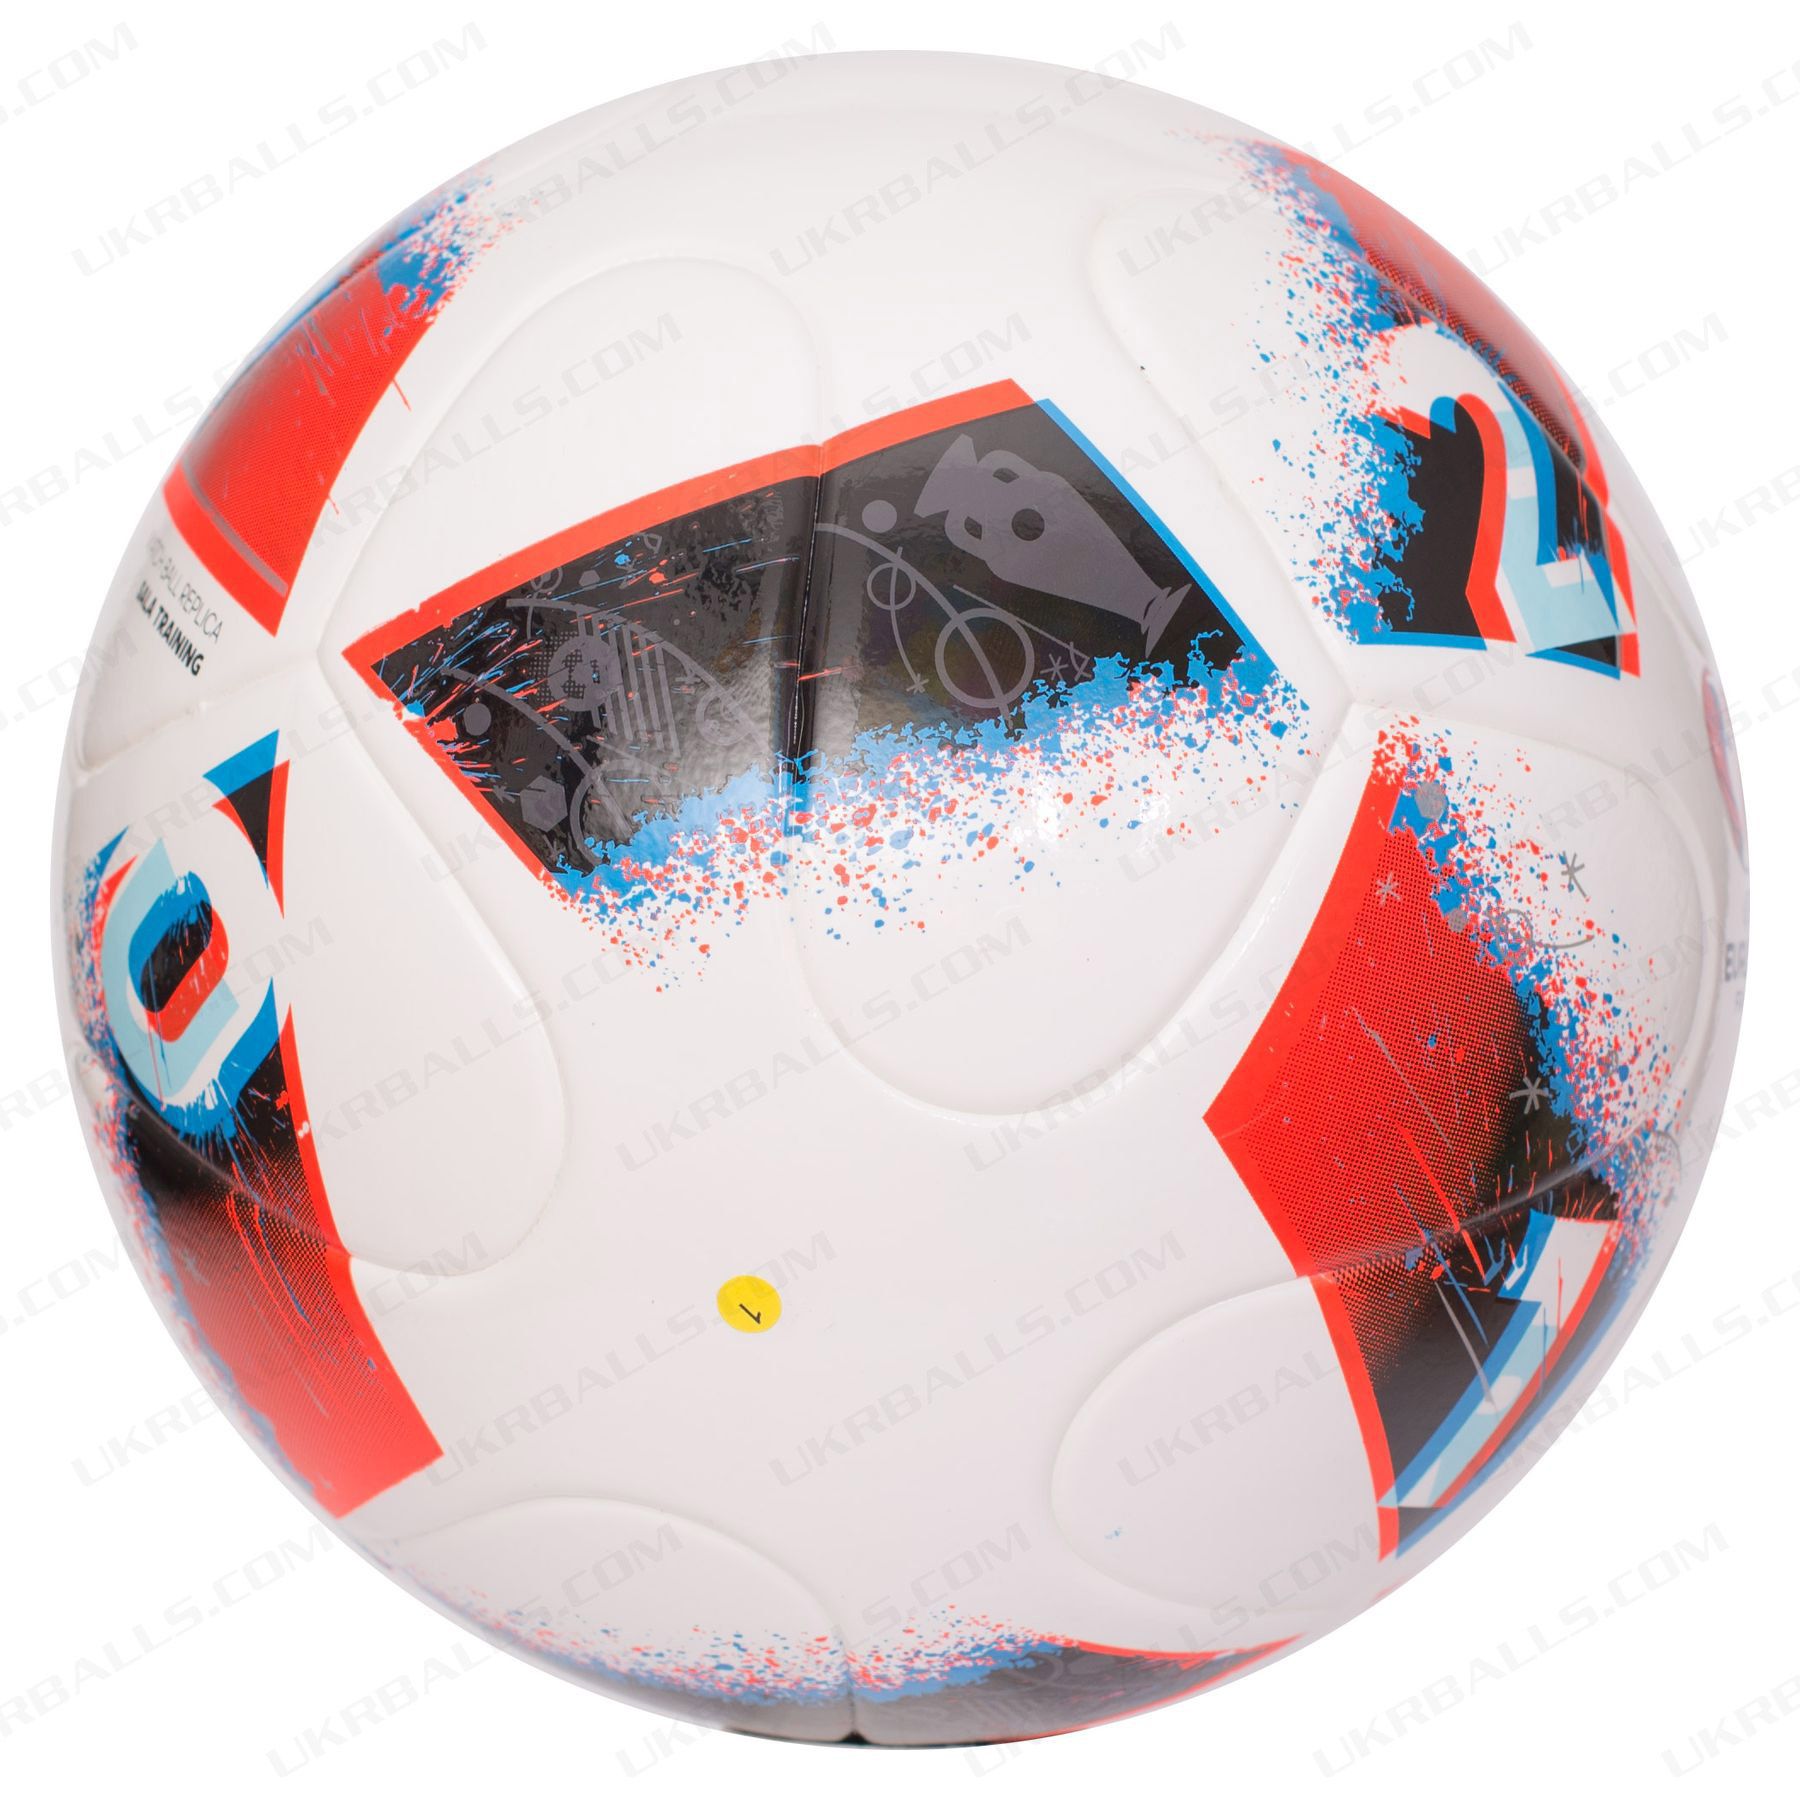 Футзальный мяч Adidas EURO 2016 Fracas Sala Training, артикул: AO4859